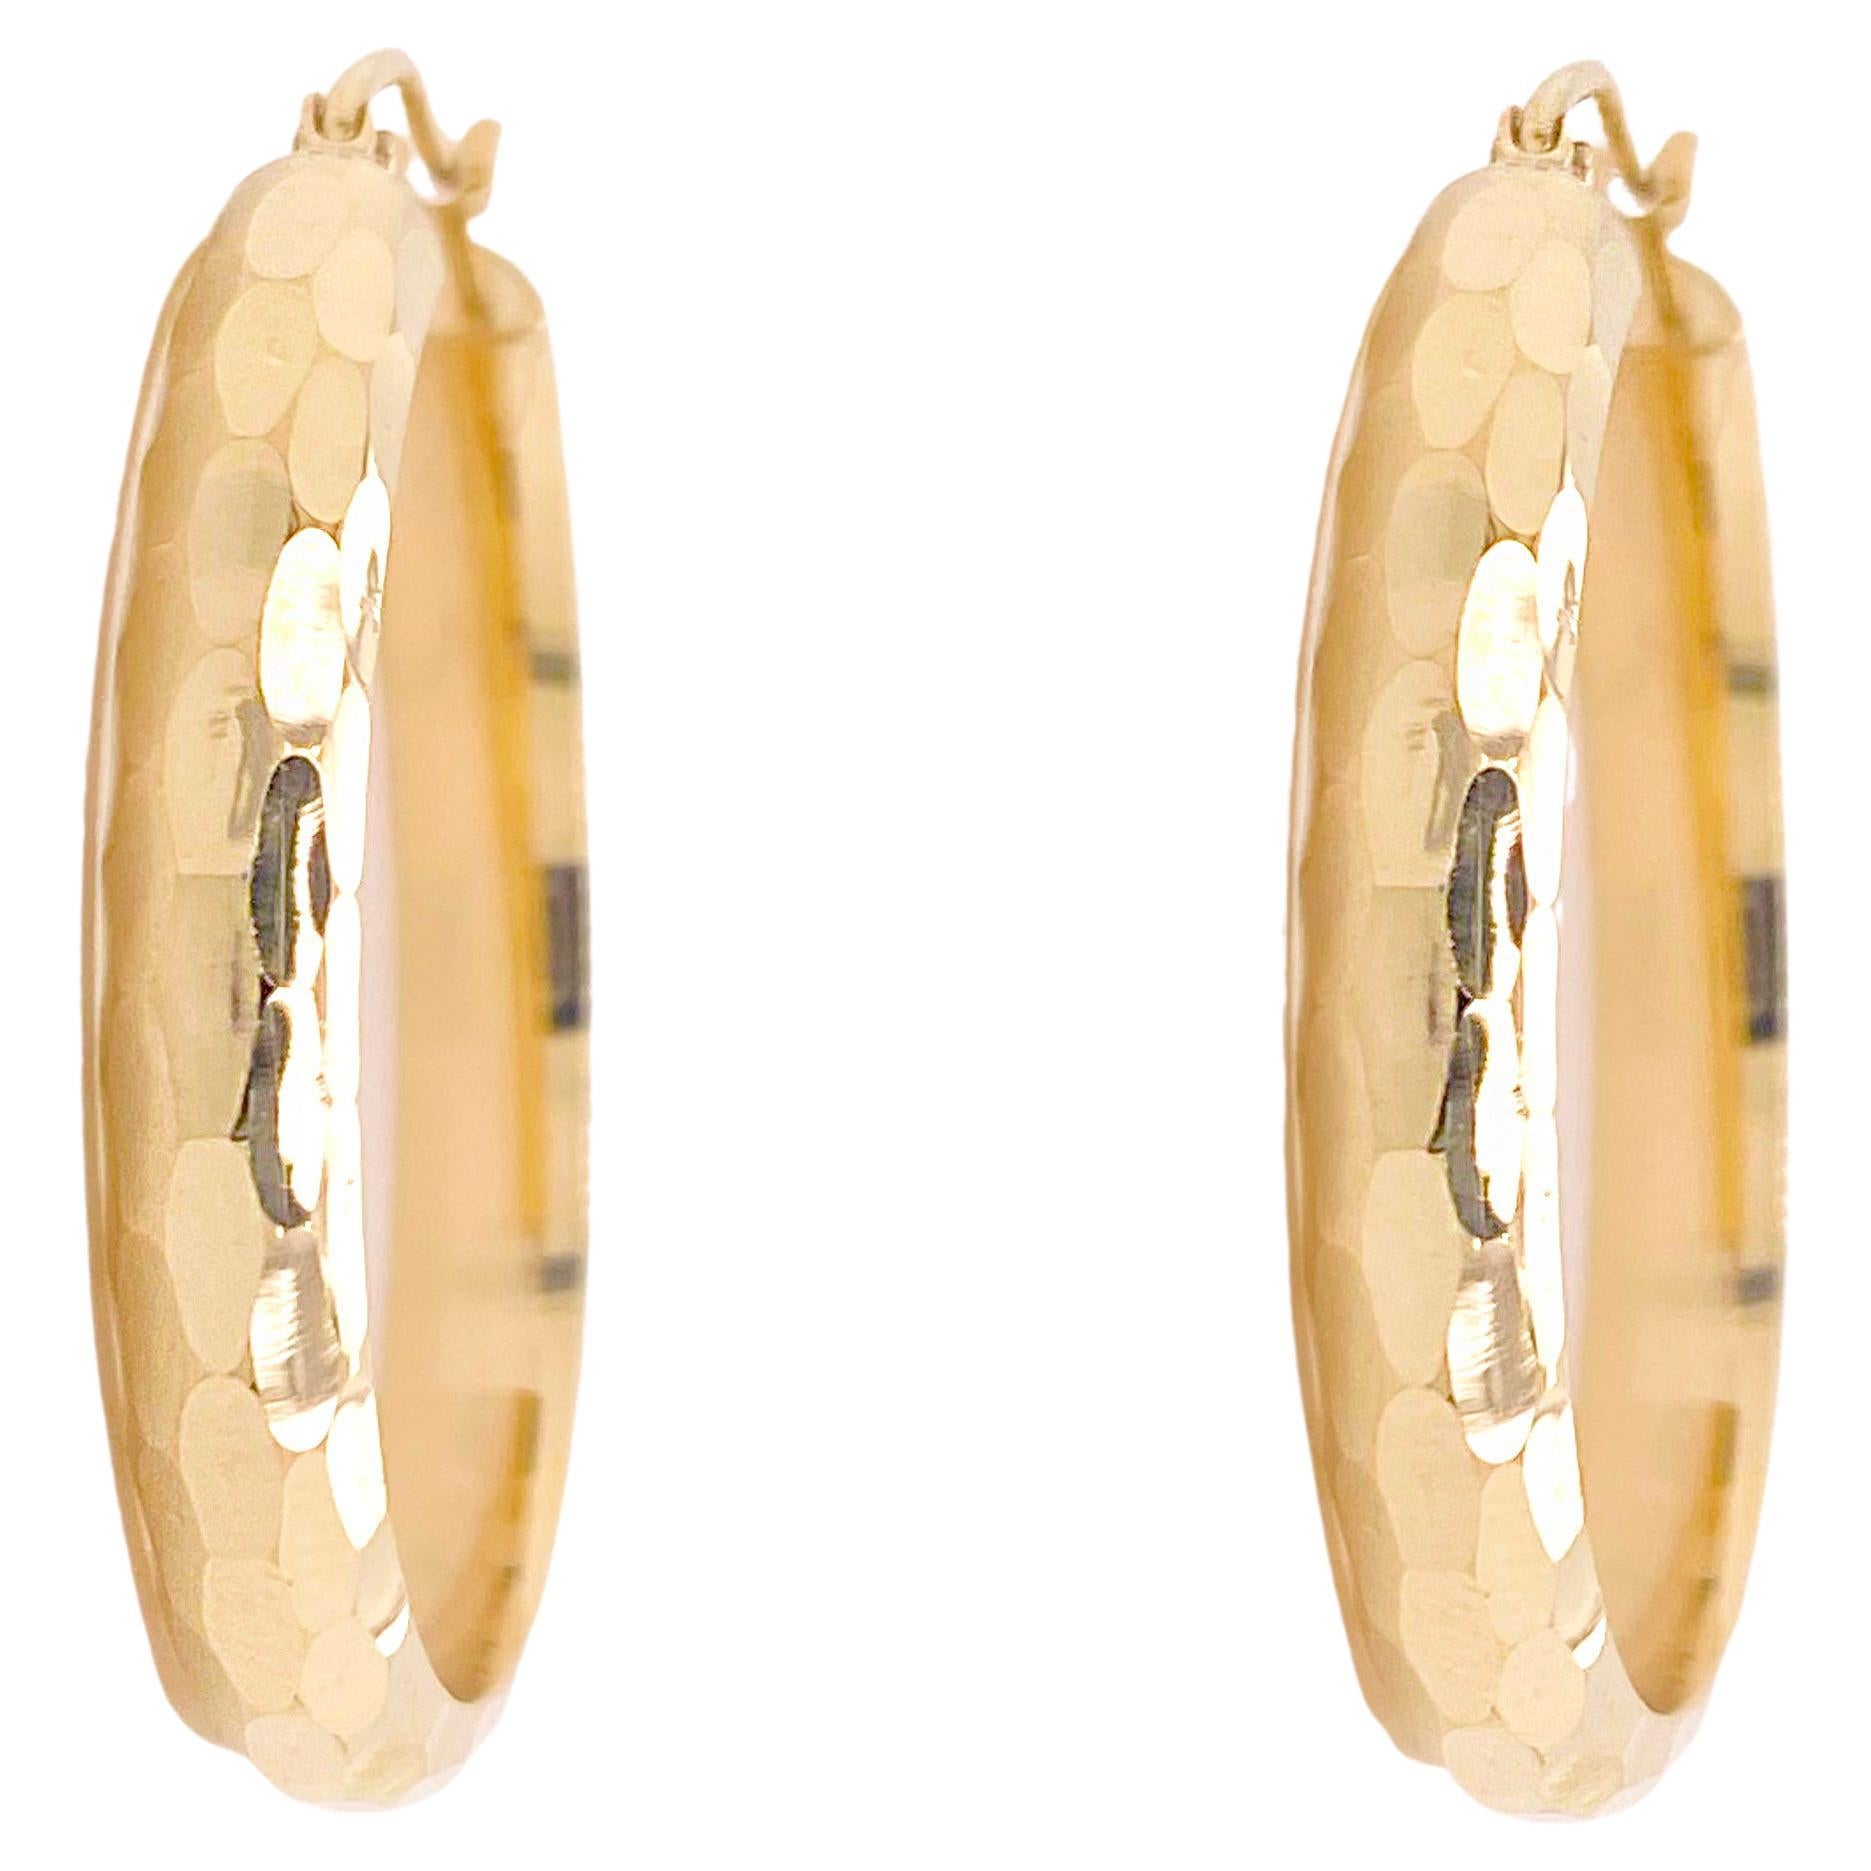 Hammered Style Hoops, Diamond Cut Hoop Earrings, 14K Yellow Gold